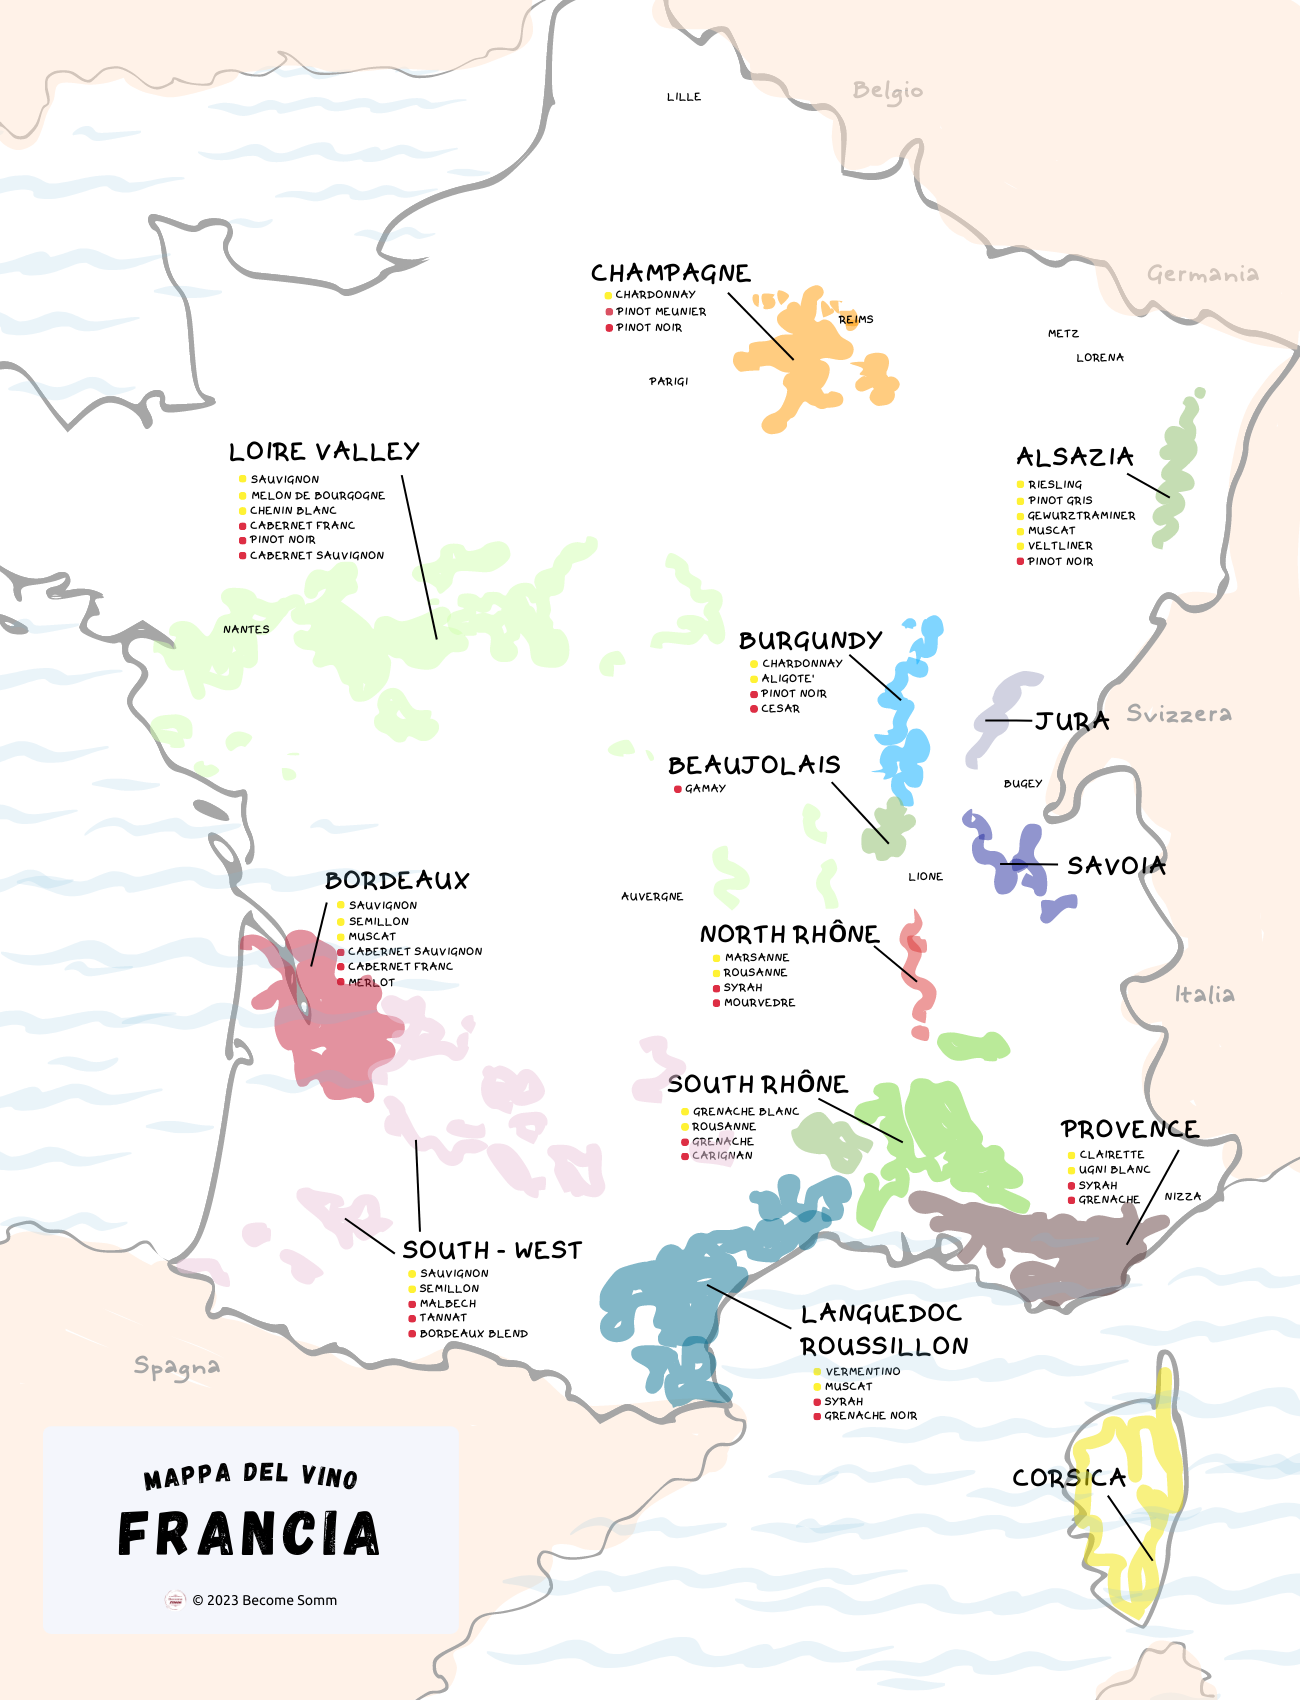 Wine Map Mappa del vino Francia France
Carte des vins de France